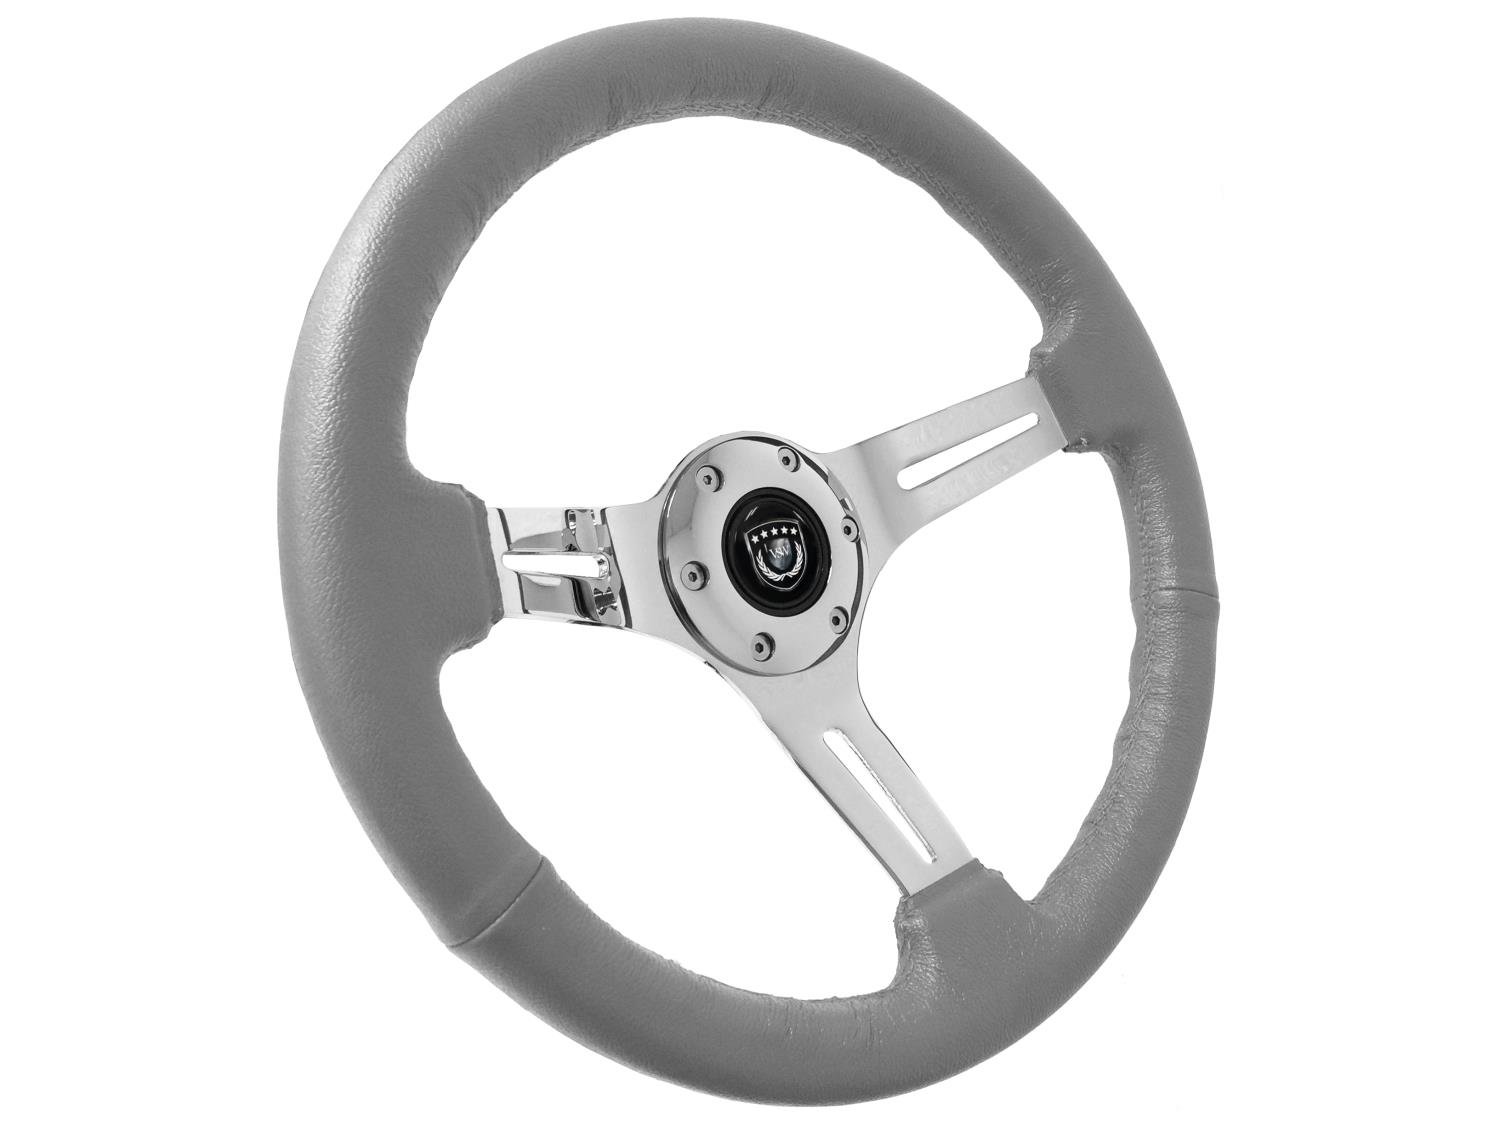 S6 Sport Steering Wheel, 14 in. Diameter, Premium Gray Leather Grip